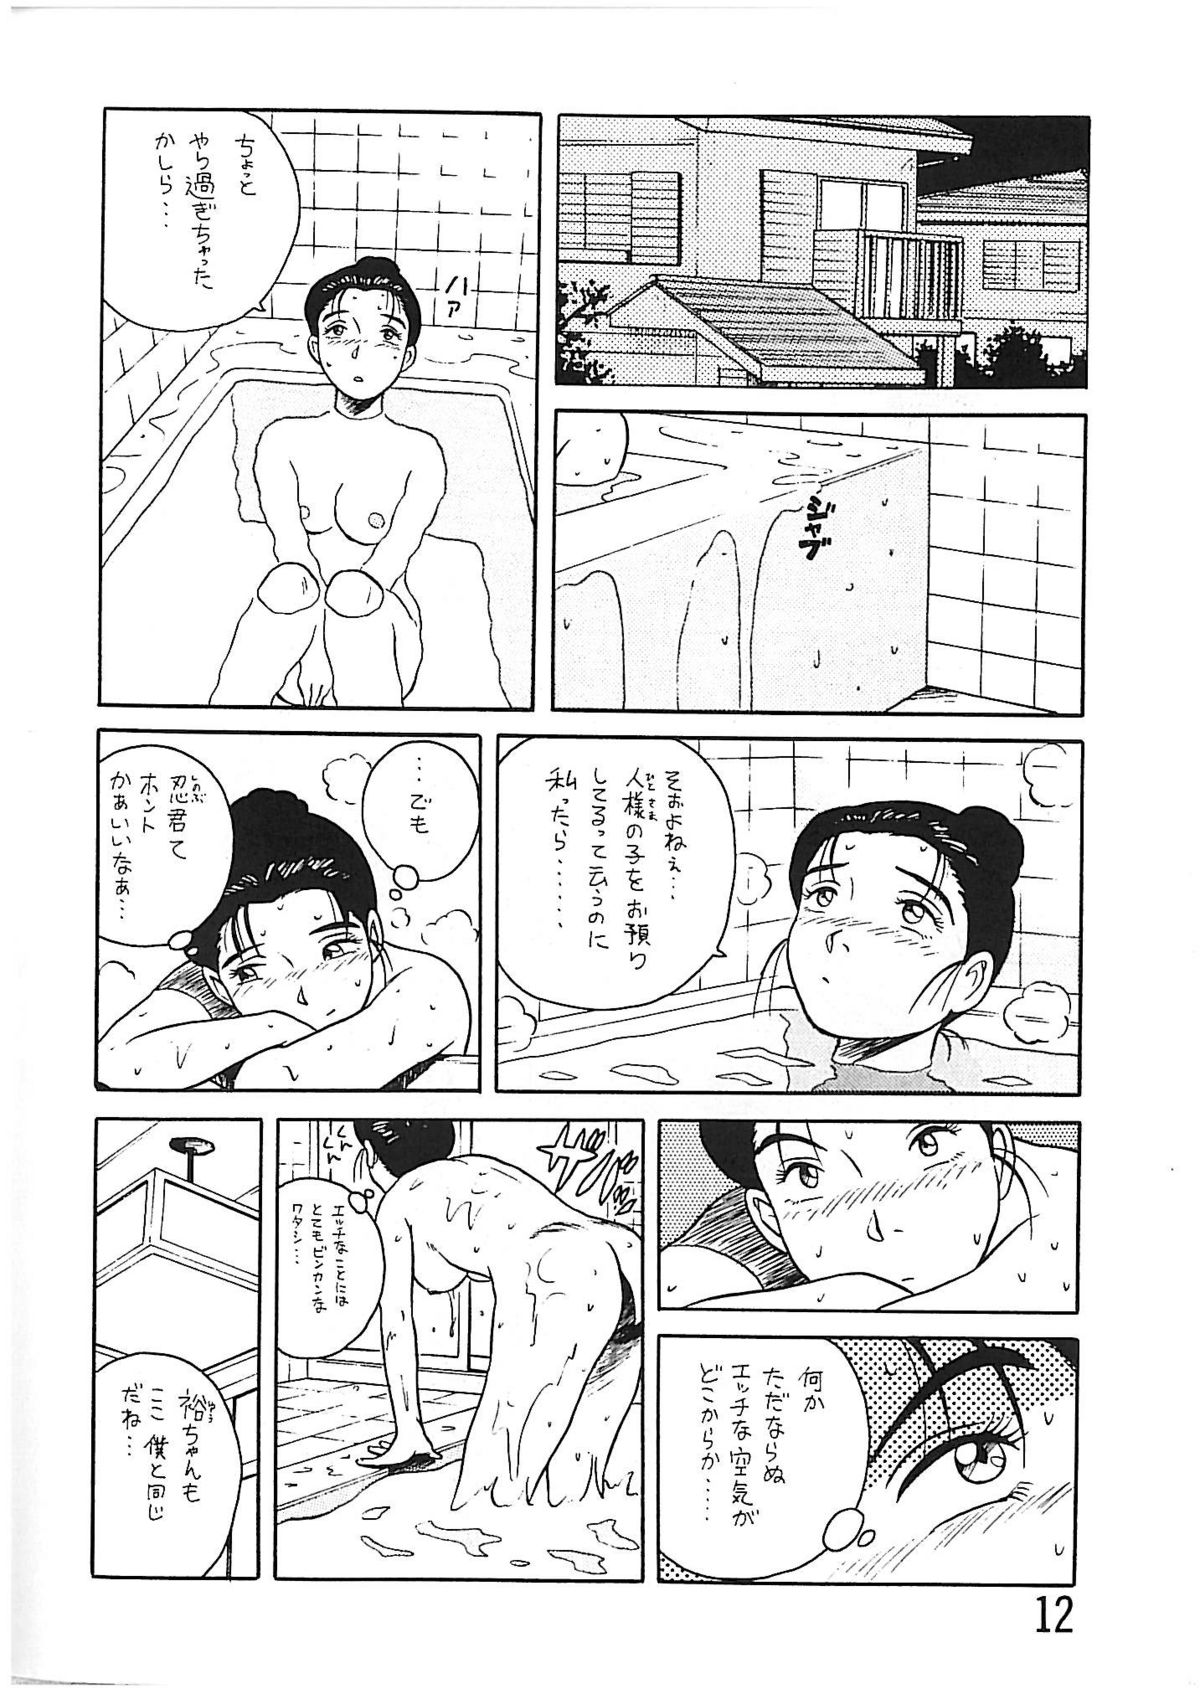 [NEW WORLD ORDER (Anda Daichi)] BOY'S LIFE CORE 2 page 11 full